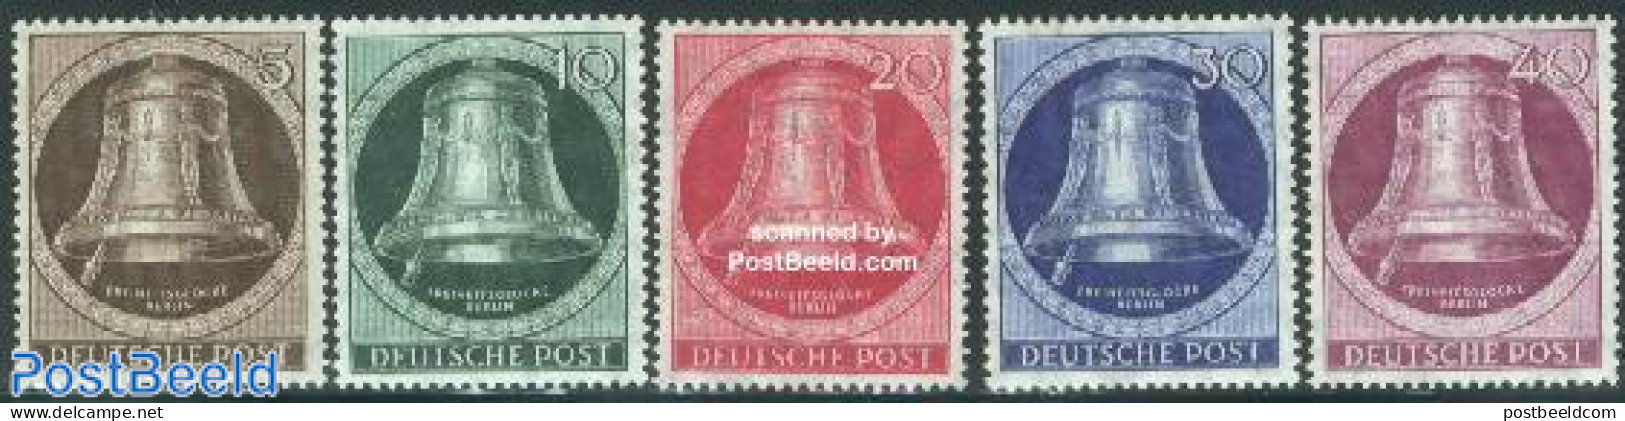 Germany, Berlin 1951 Freedom Bell 5v, Mint NH - Ungebraucht